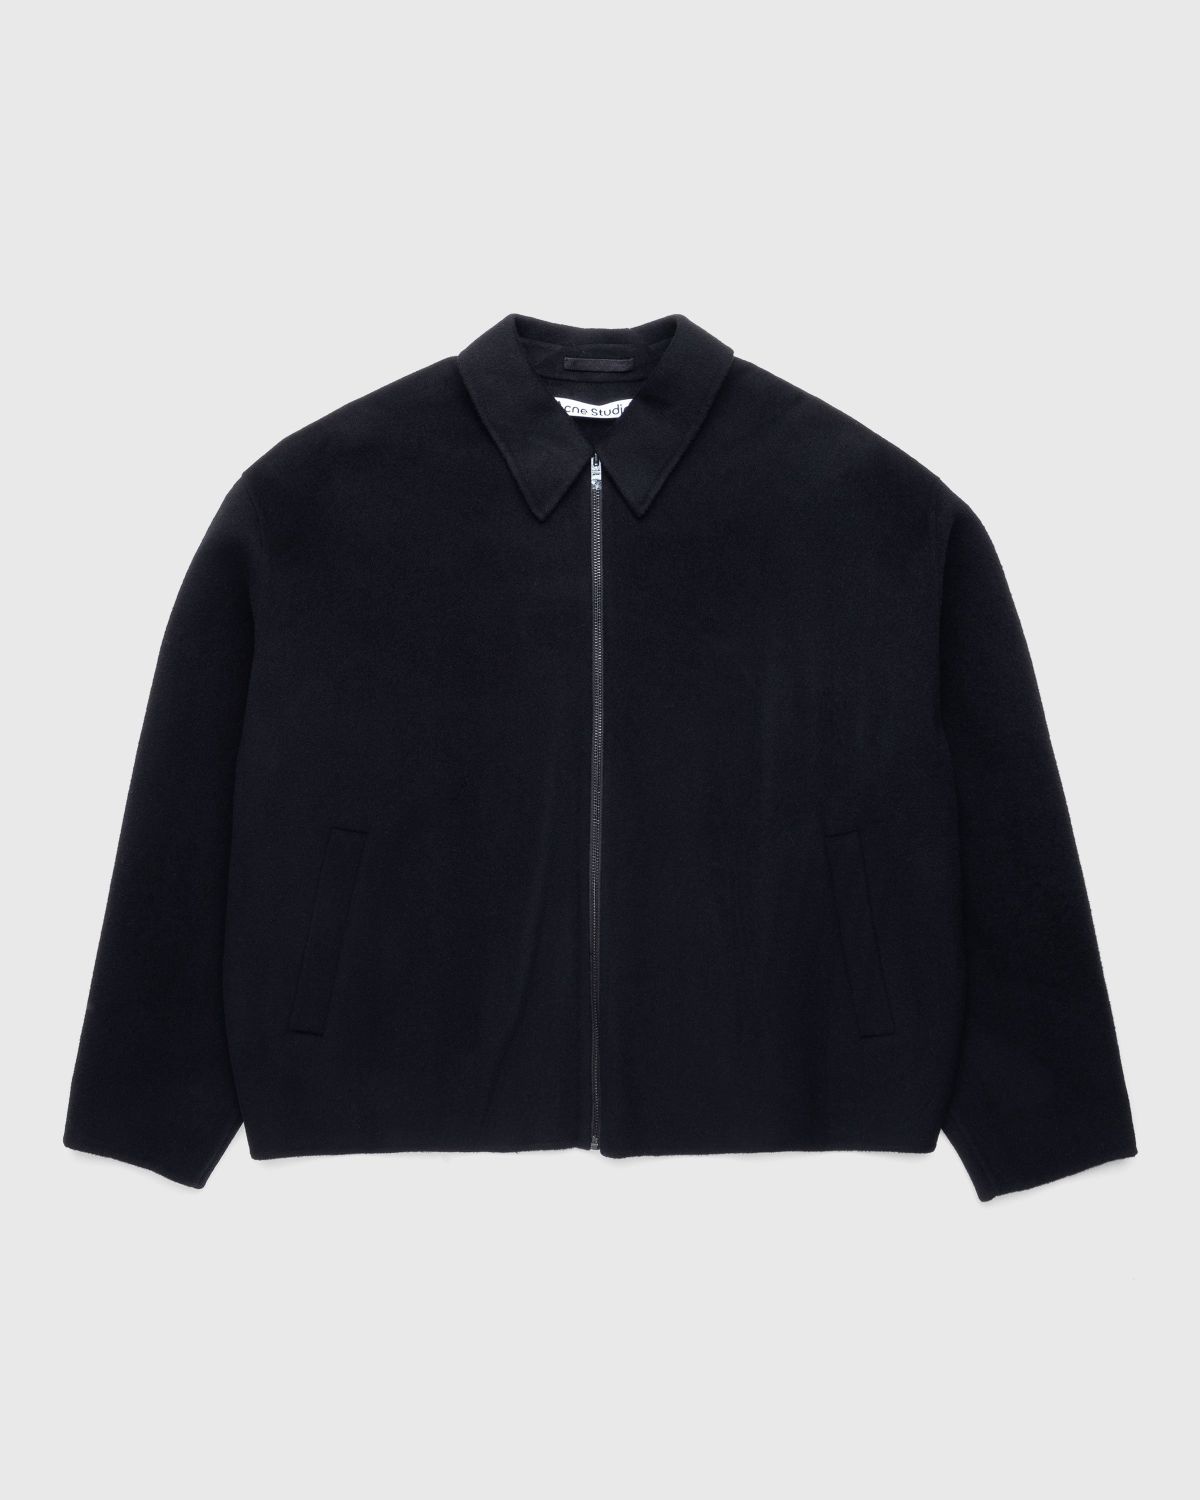 Acne Studios – Wool Zipper Jacket Black | Highsnobiety Shop